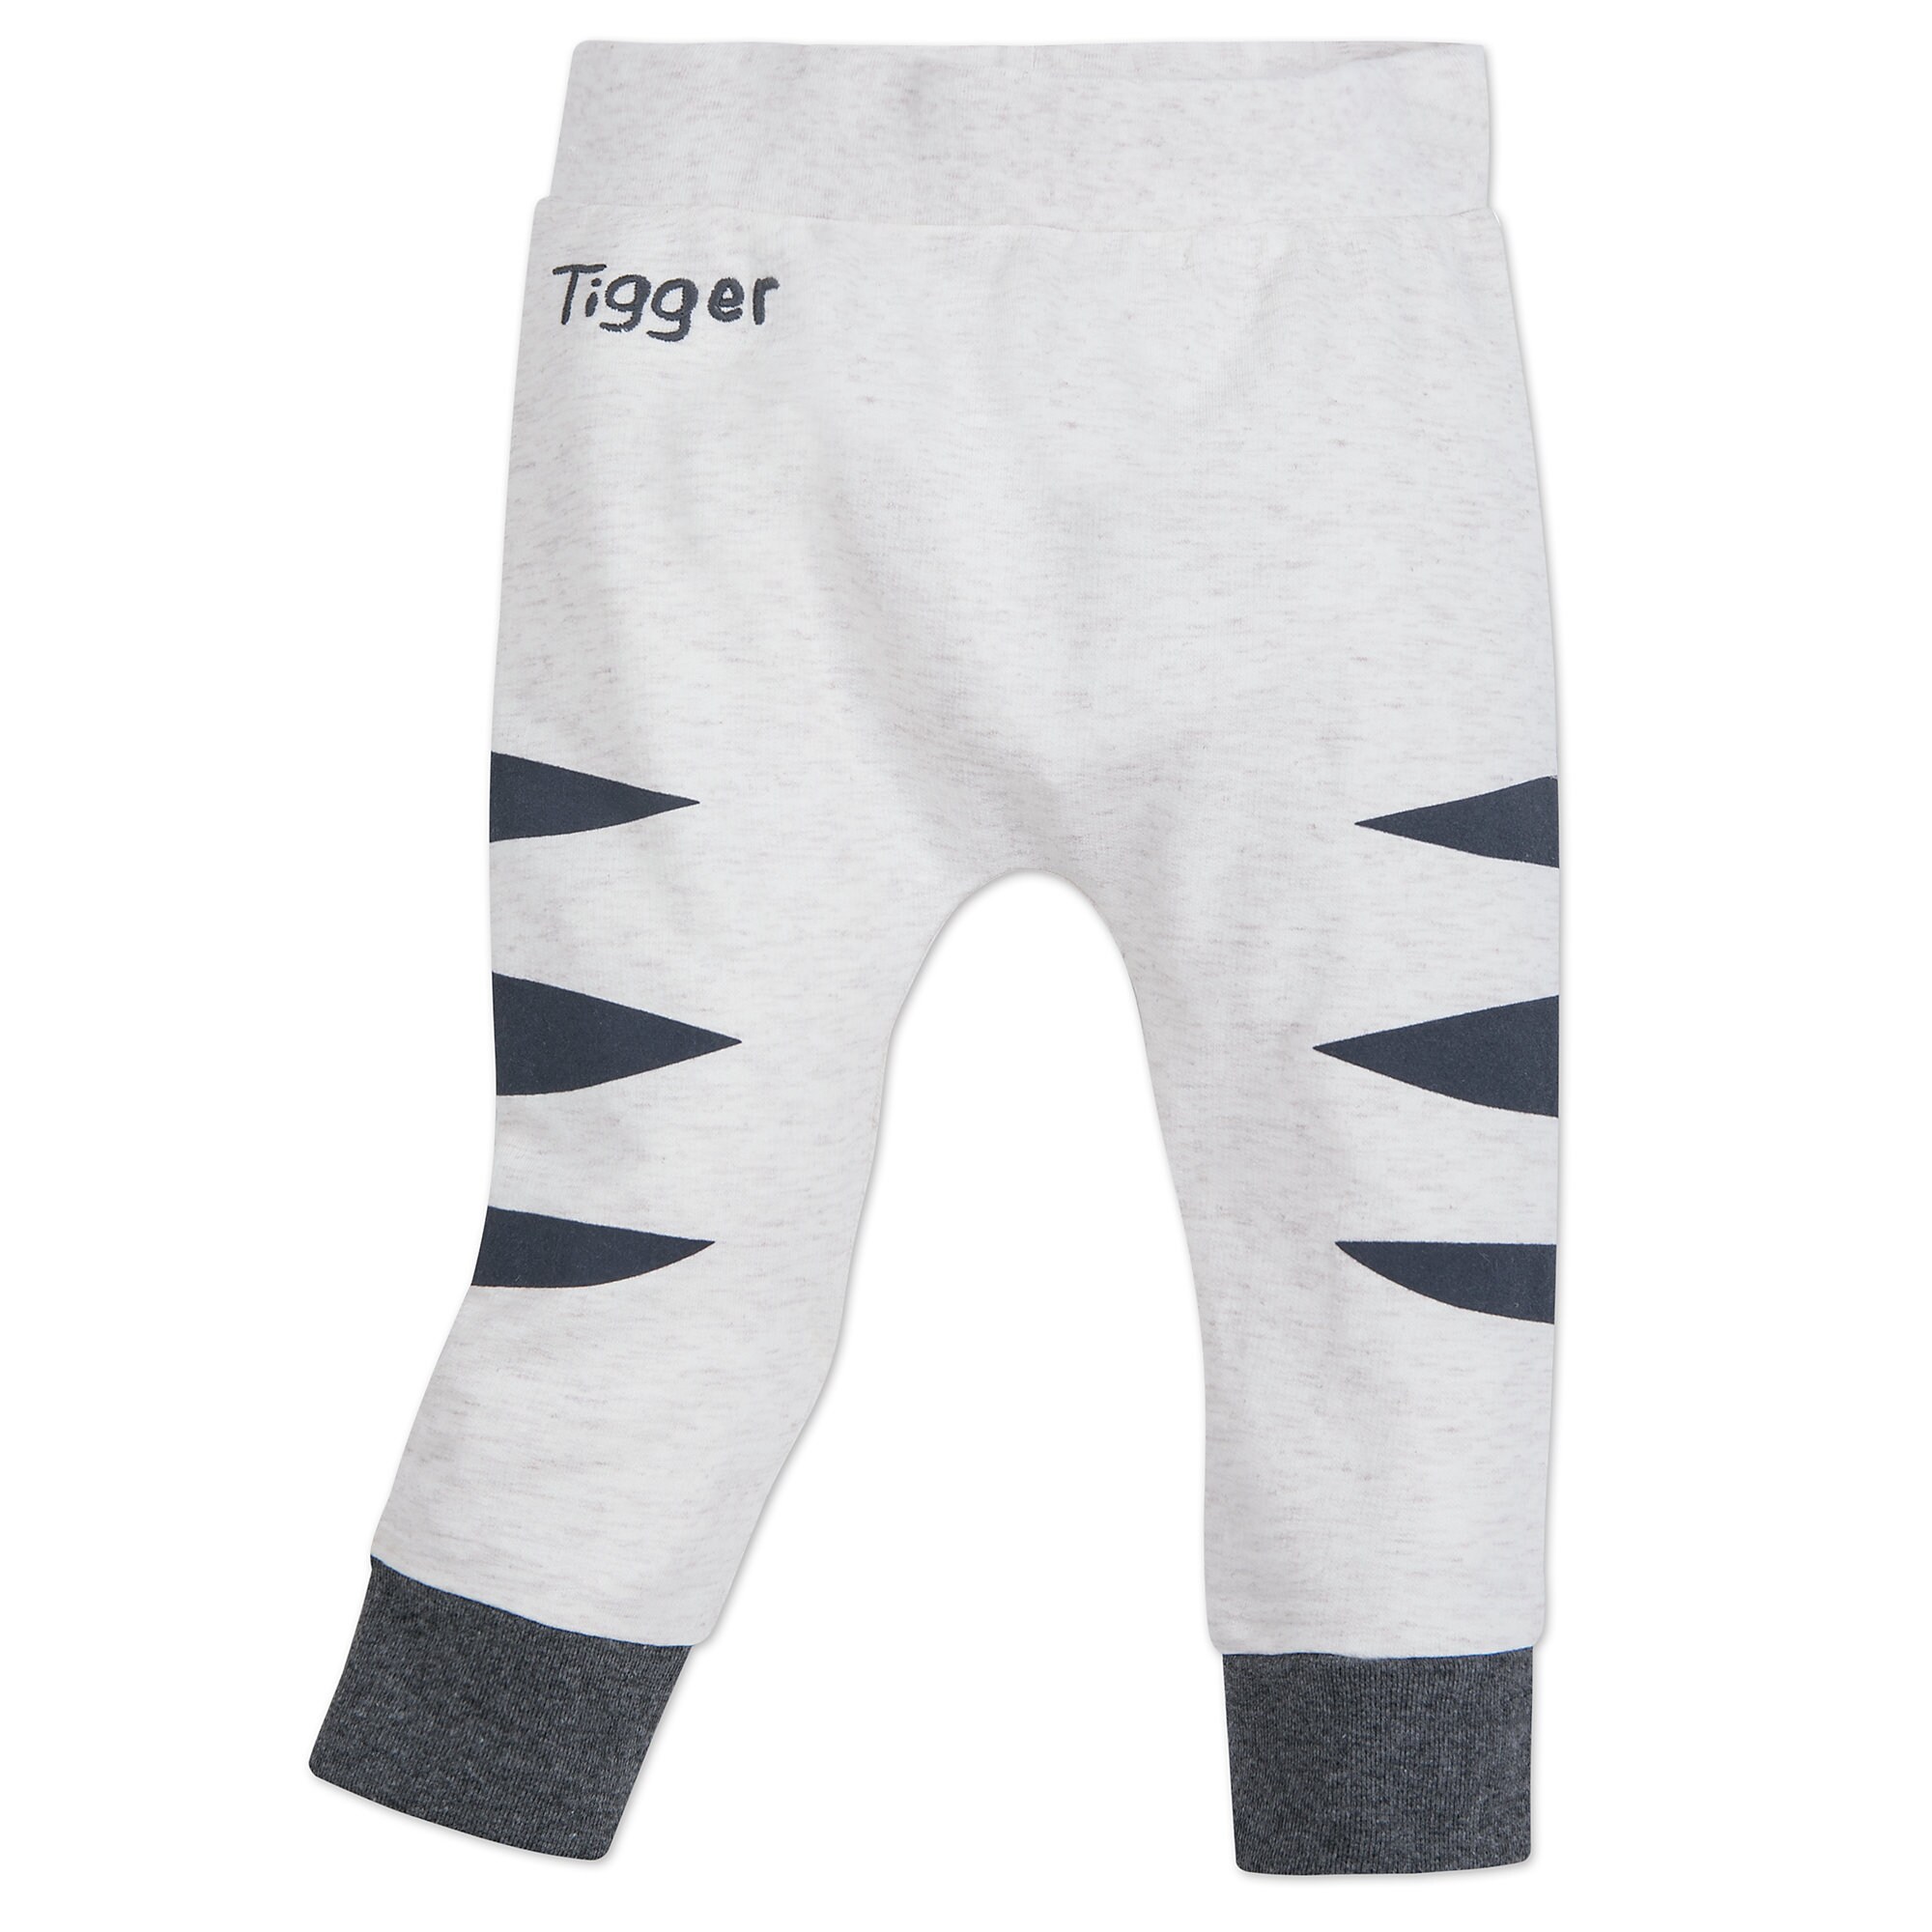 Tigger Knit Set for Baby